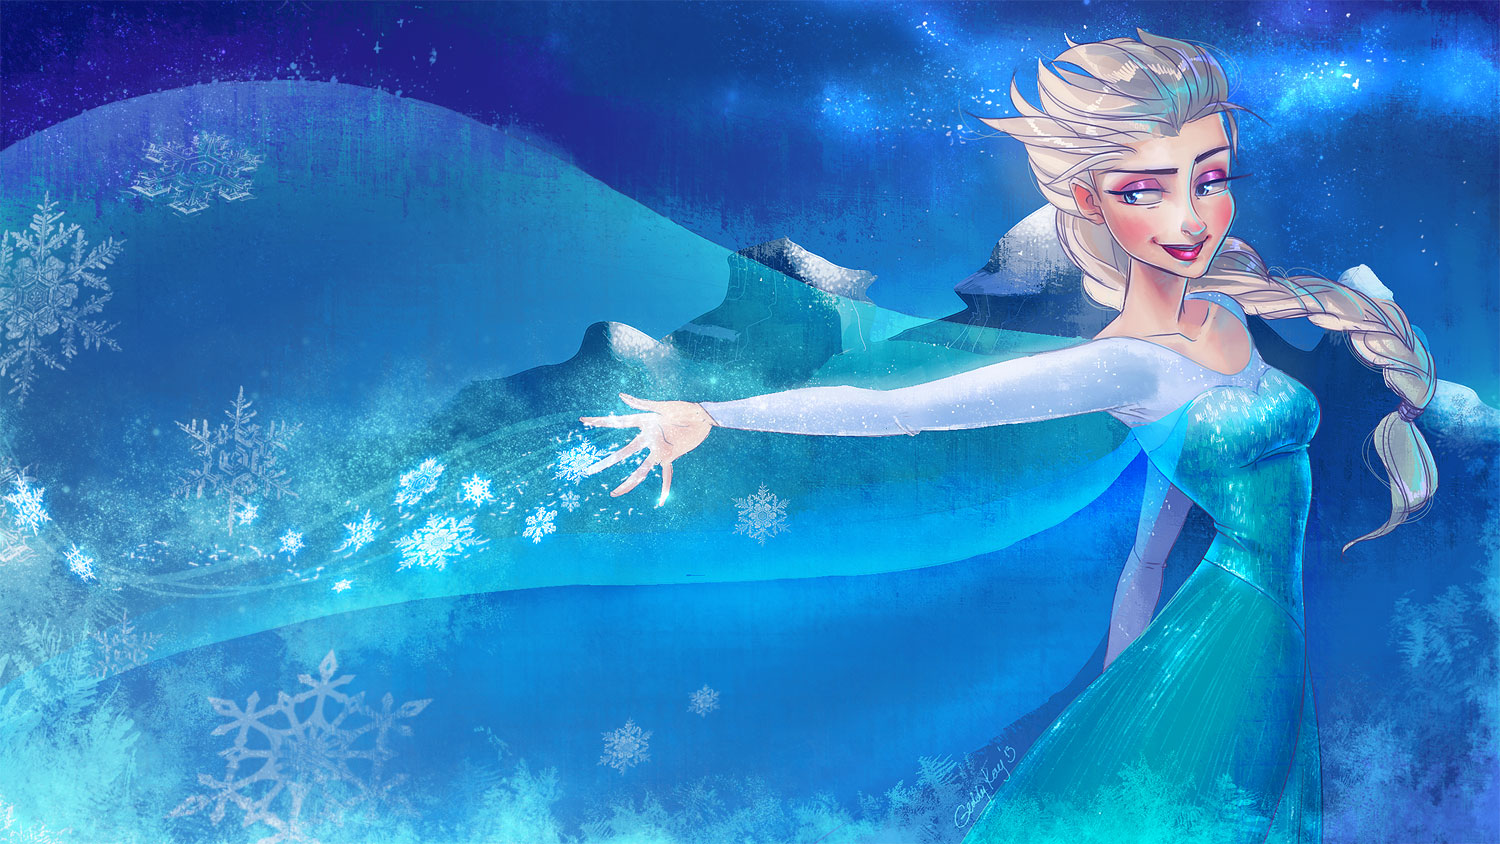 Frozen Elsa And Anna Wallpaper Digital Fan Art 4 picture 1500x844